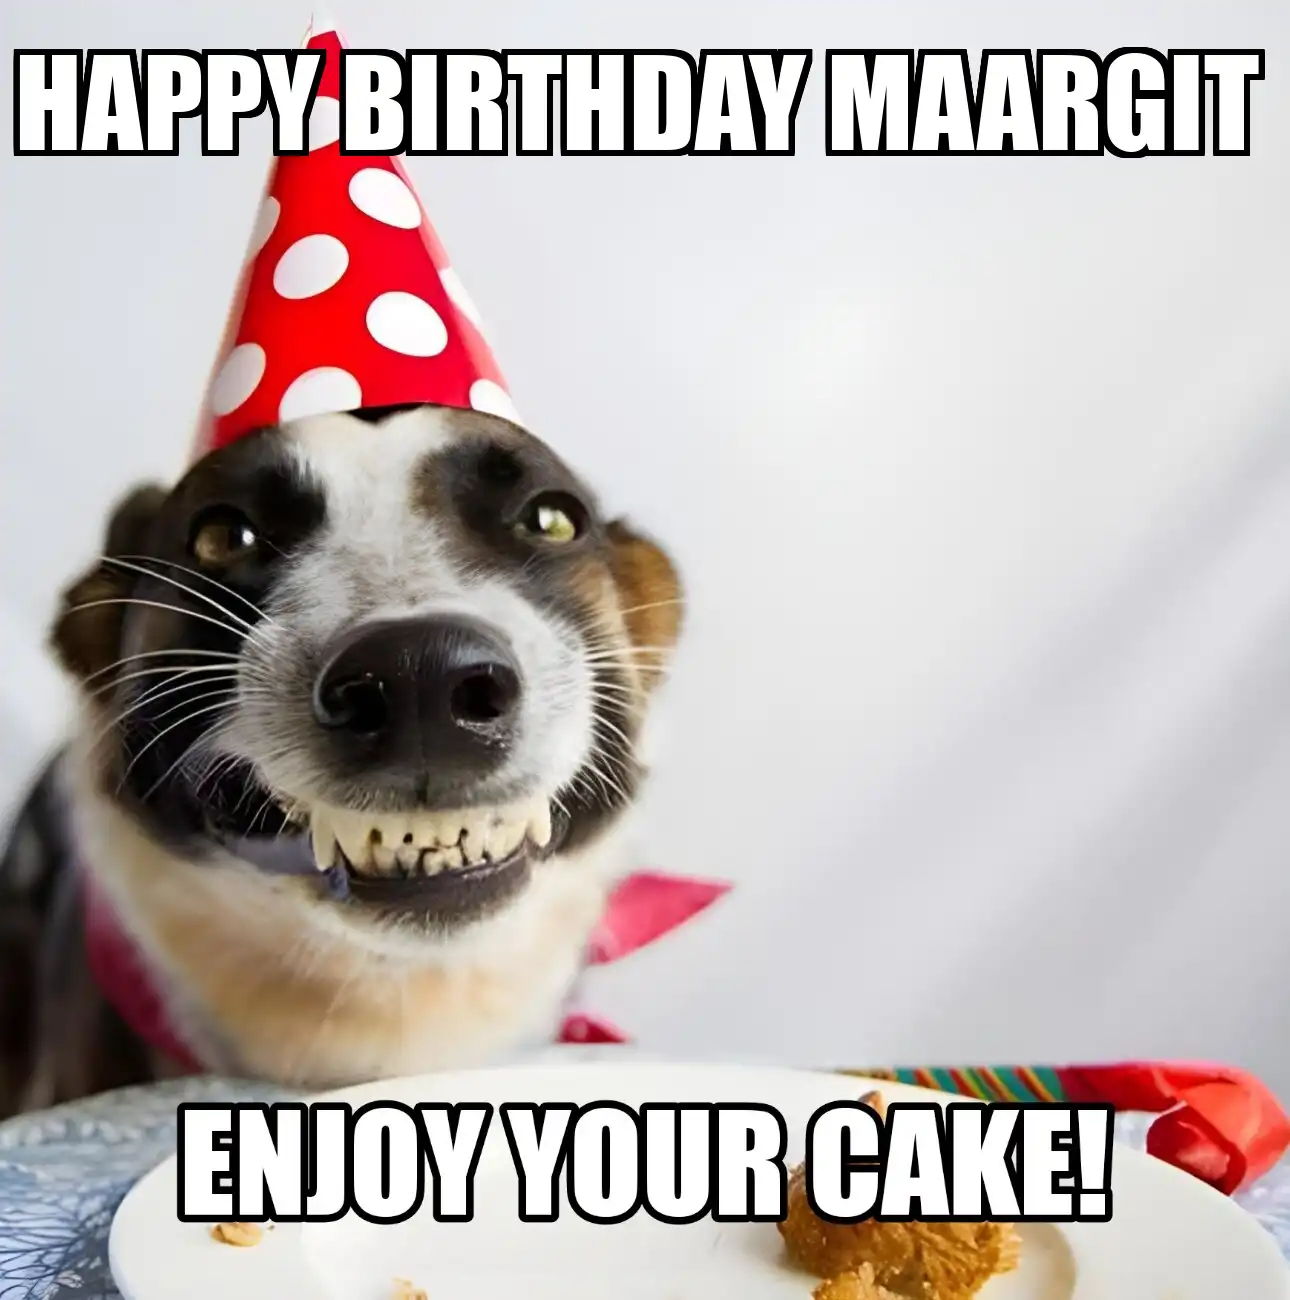 Happy Birthday Maargit Enjoy Your Cake Dog Meme